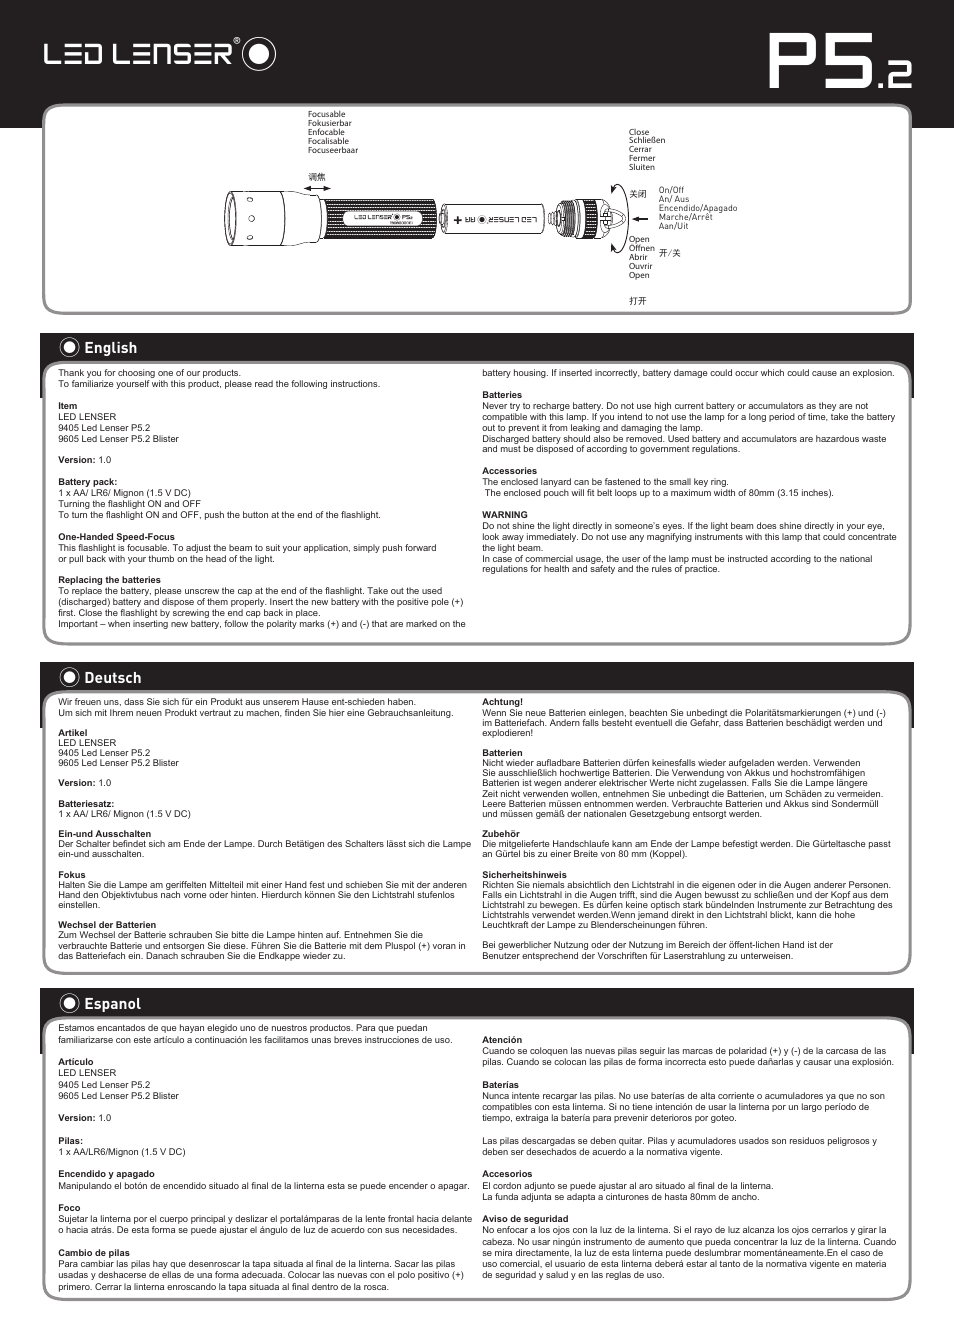 LED LENSER P5.2 User Manual | 2 Original